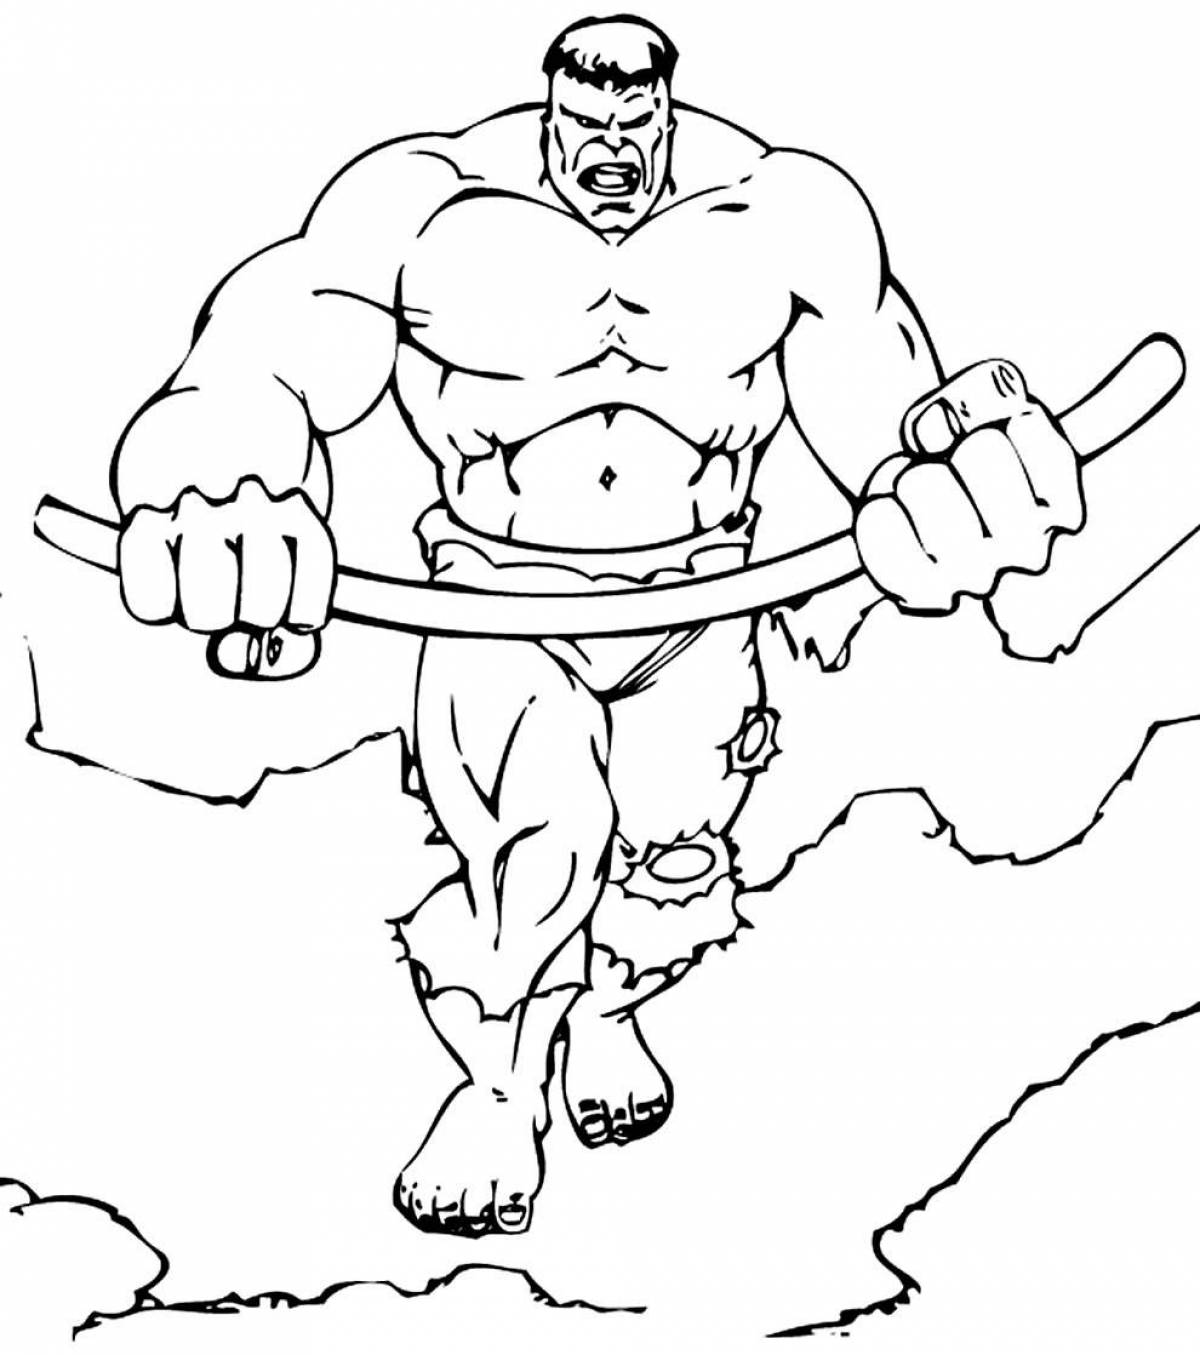 Hulk fun coloring for kids